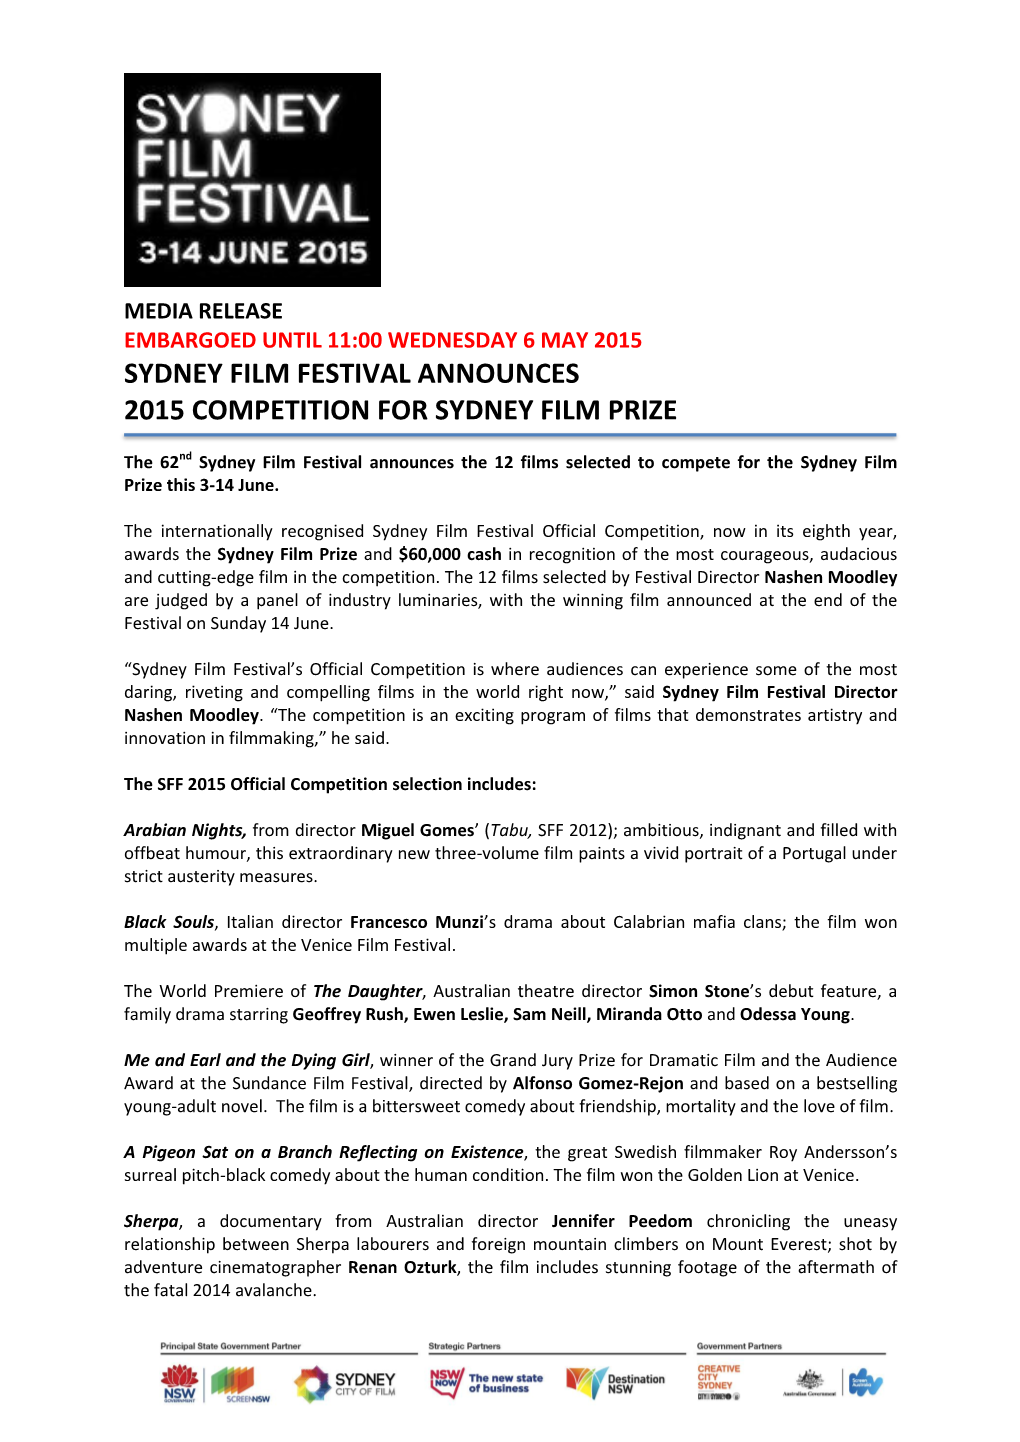 Sydney Film Festival Announces 2015 Competition for Sydney Film Prize